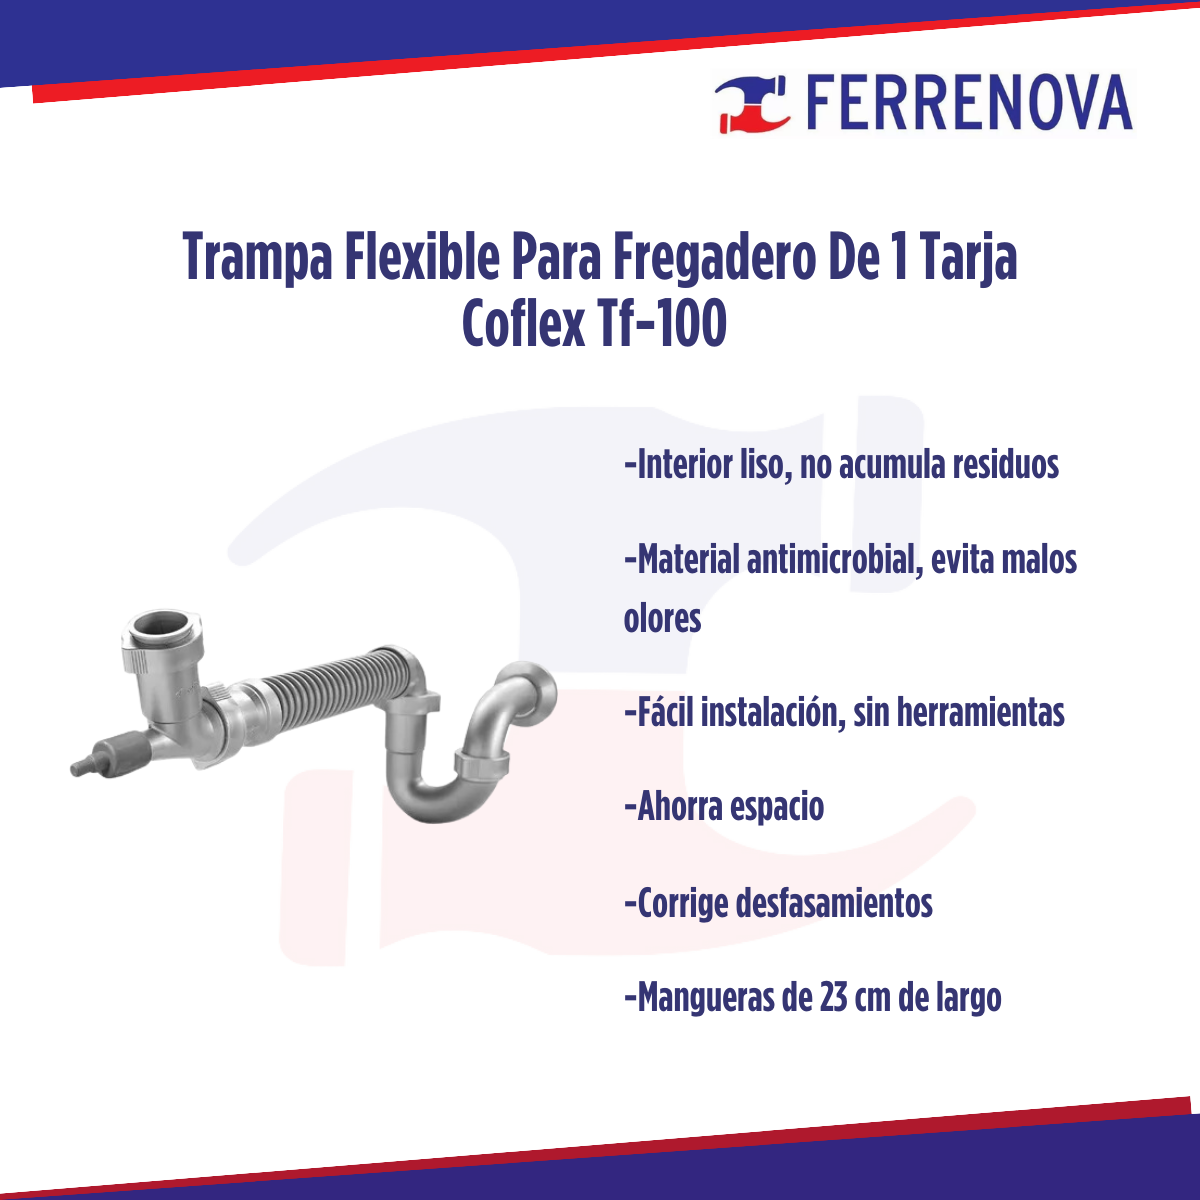 Trampa Flexible Para Fregadero De 1 Tarja Coflex Tf-100